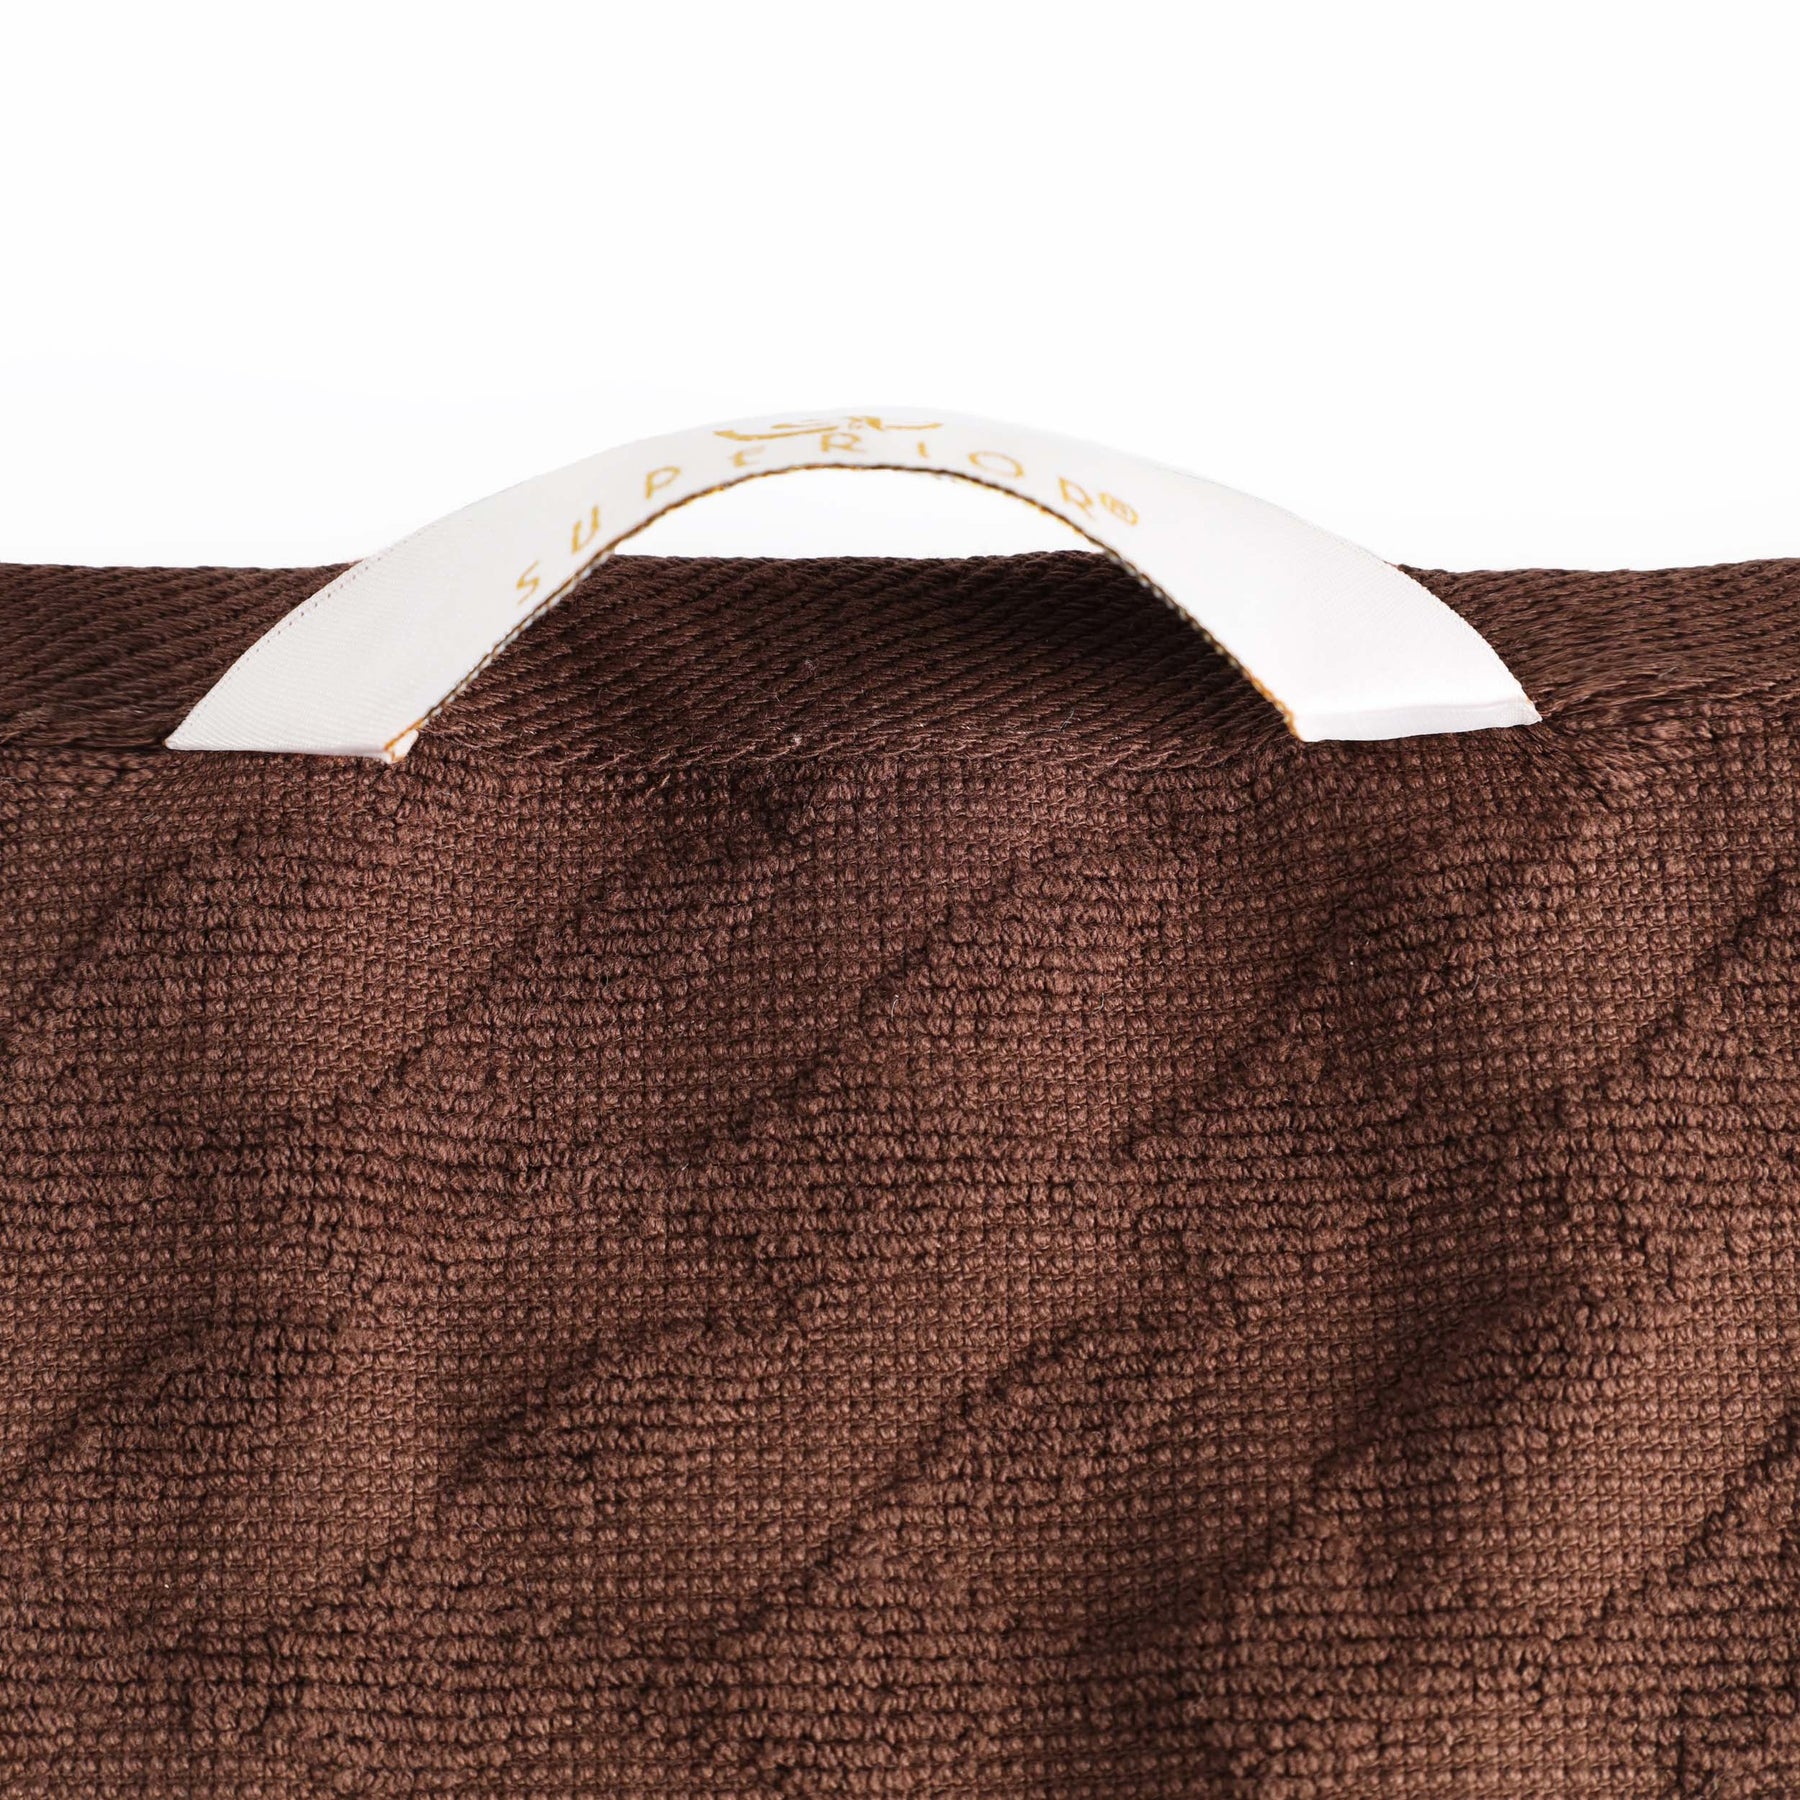 Premium Turkish Cotton Jacquard Herringbone and Solid 4-Piece Bath Towel Set -  Chocolate